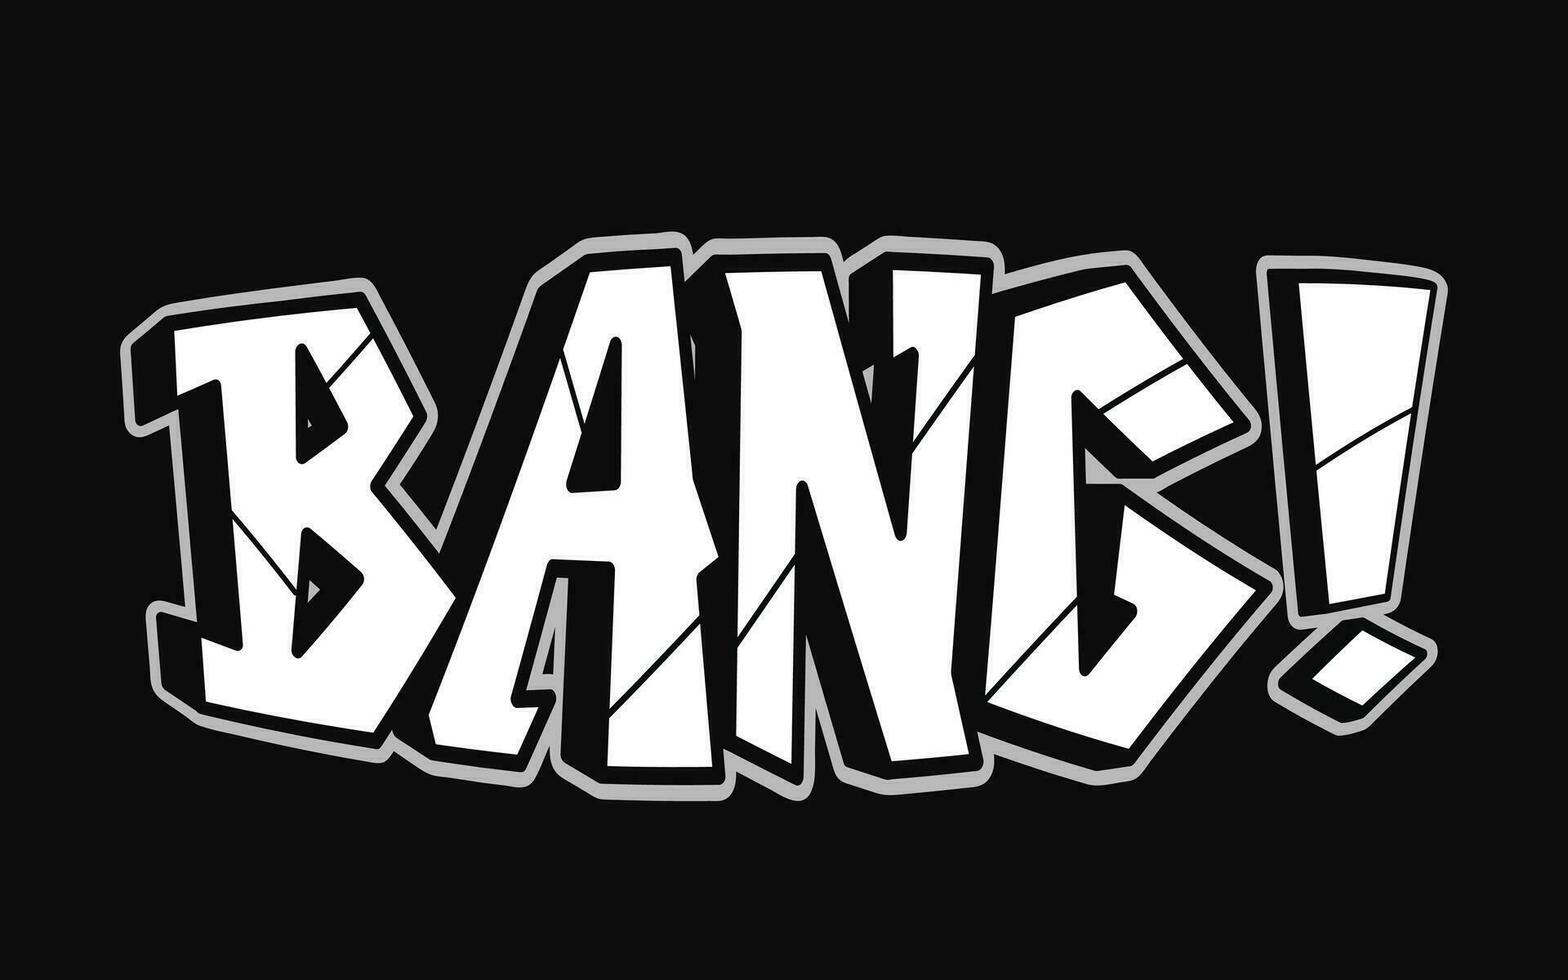 Bang - single word, letters graffiti style. Vector hand drawn logo. Funny cool trippy word Bang, fashion, graffiti style print t-shirt, poster concept